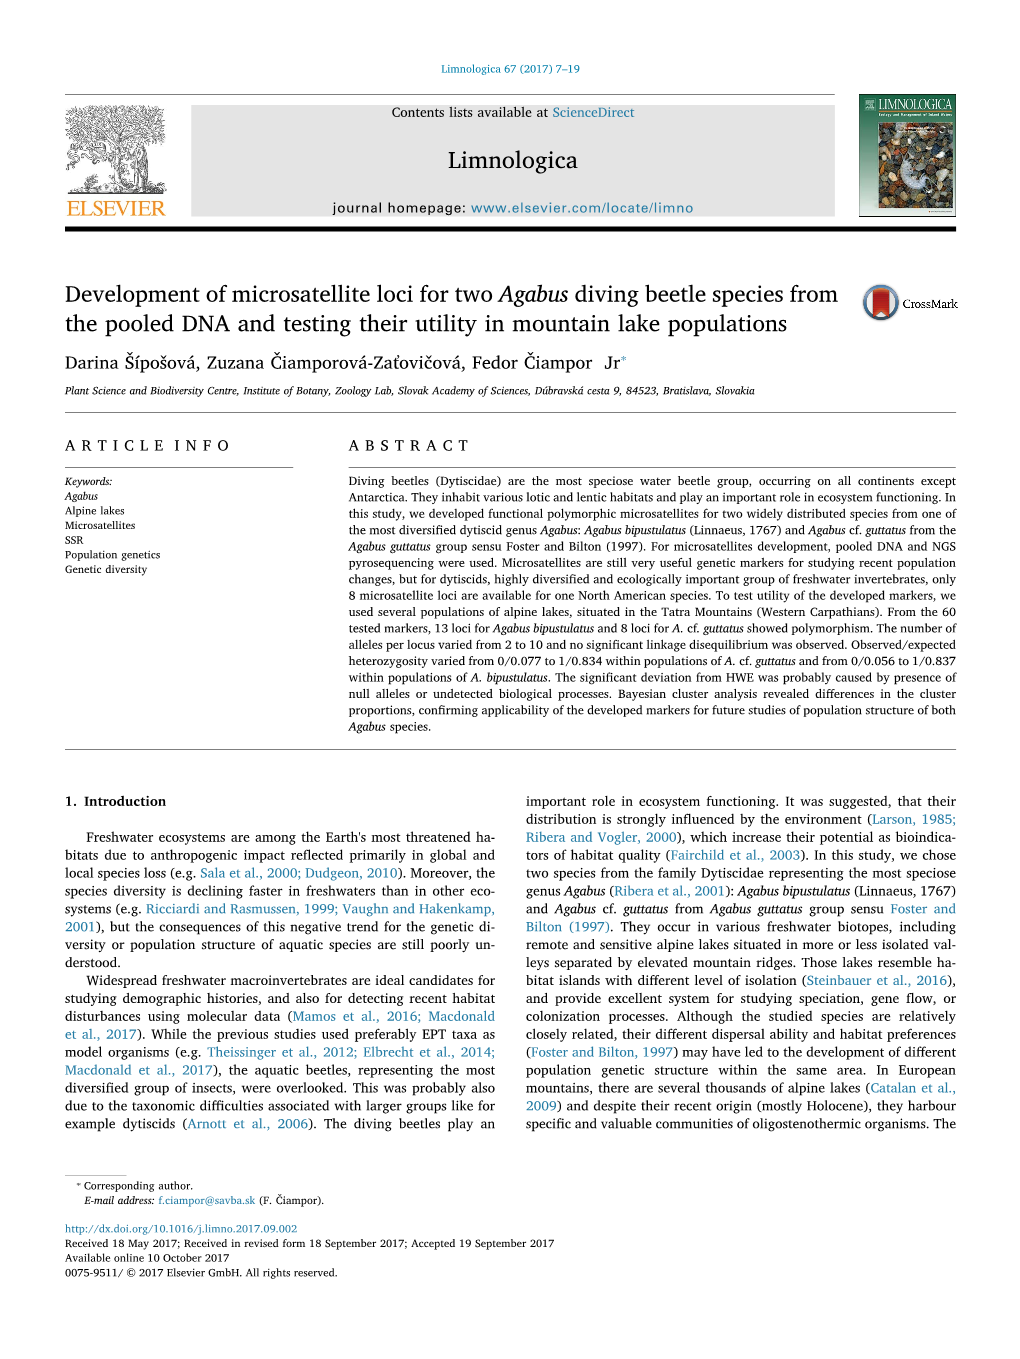 Development of Microsatellite Loci for Two Agabus Diving Beetle Species